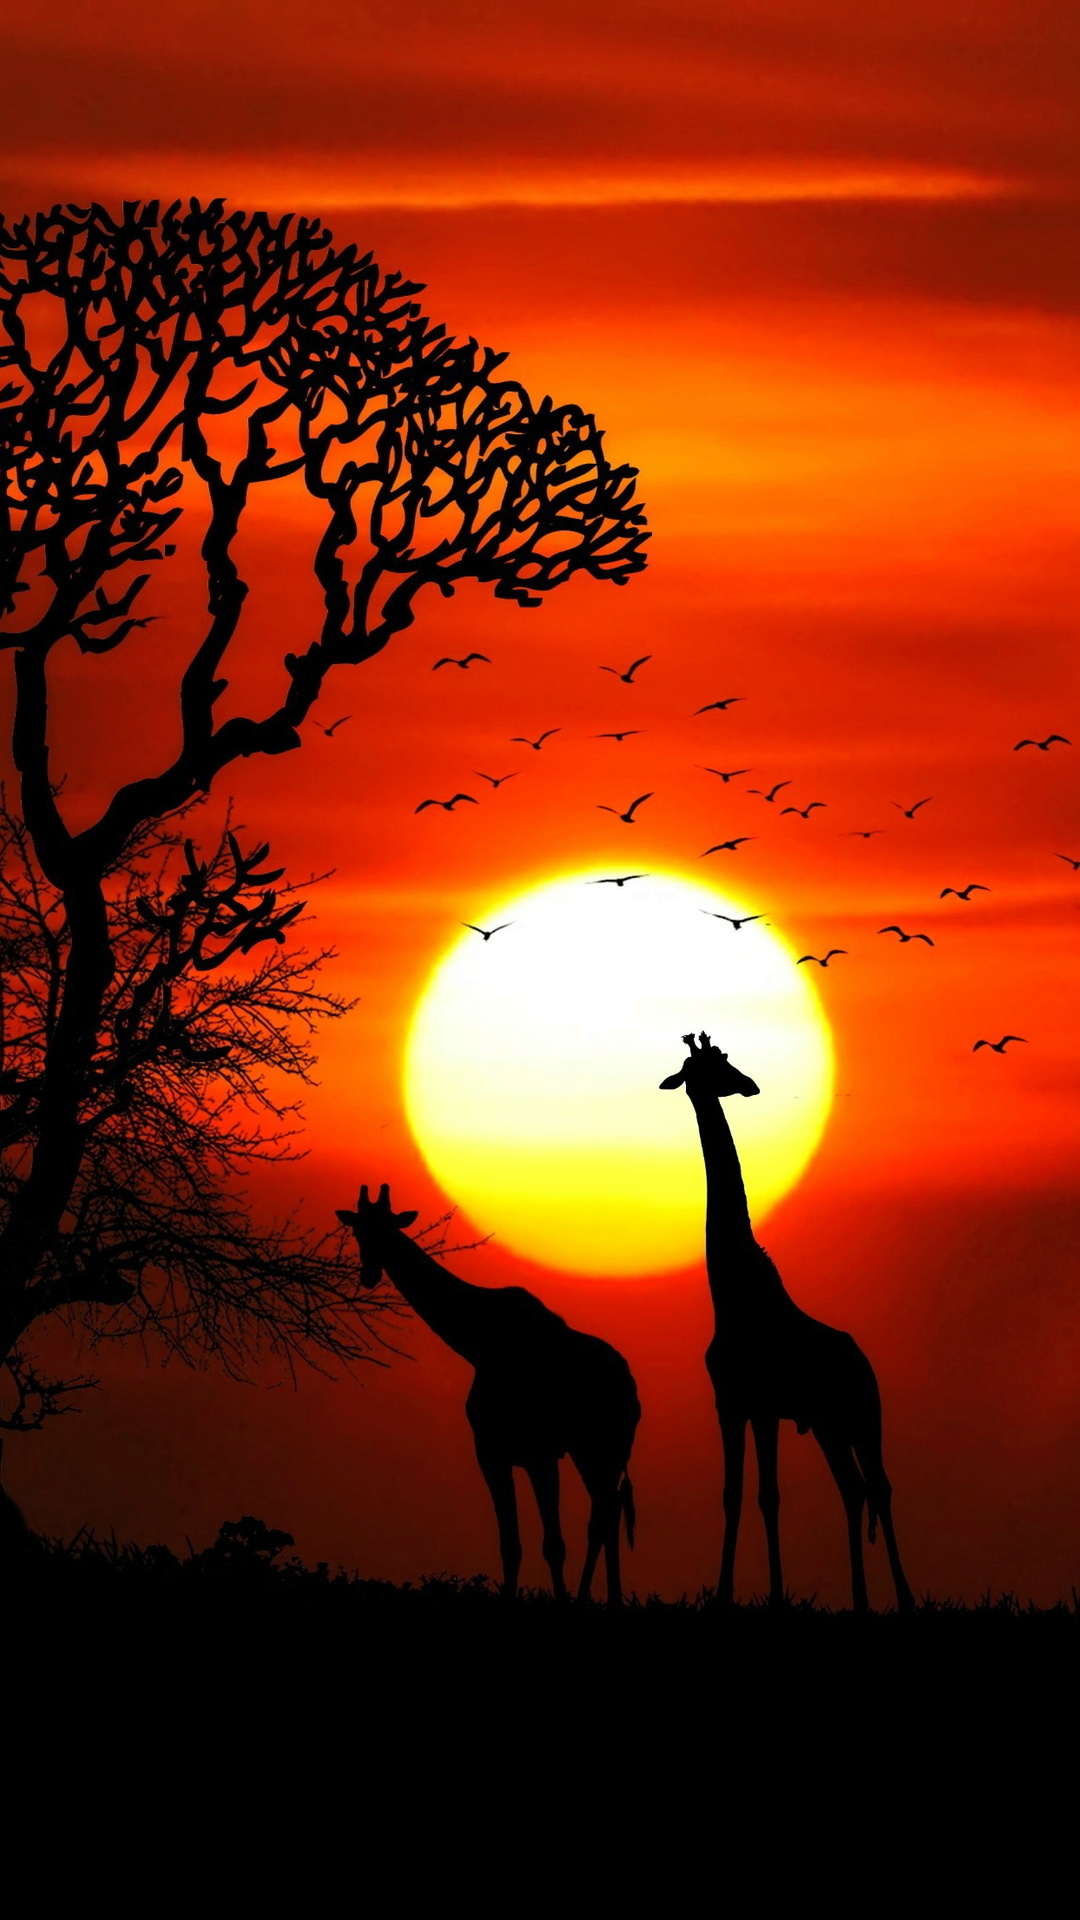 Giraffe: Sunset, Red sky, Tree, Forest, Nature, The tallest living quadruped animal. 1080x1920 Full HD Background.